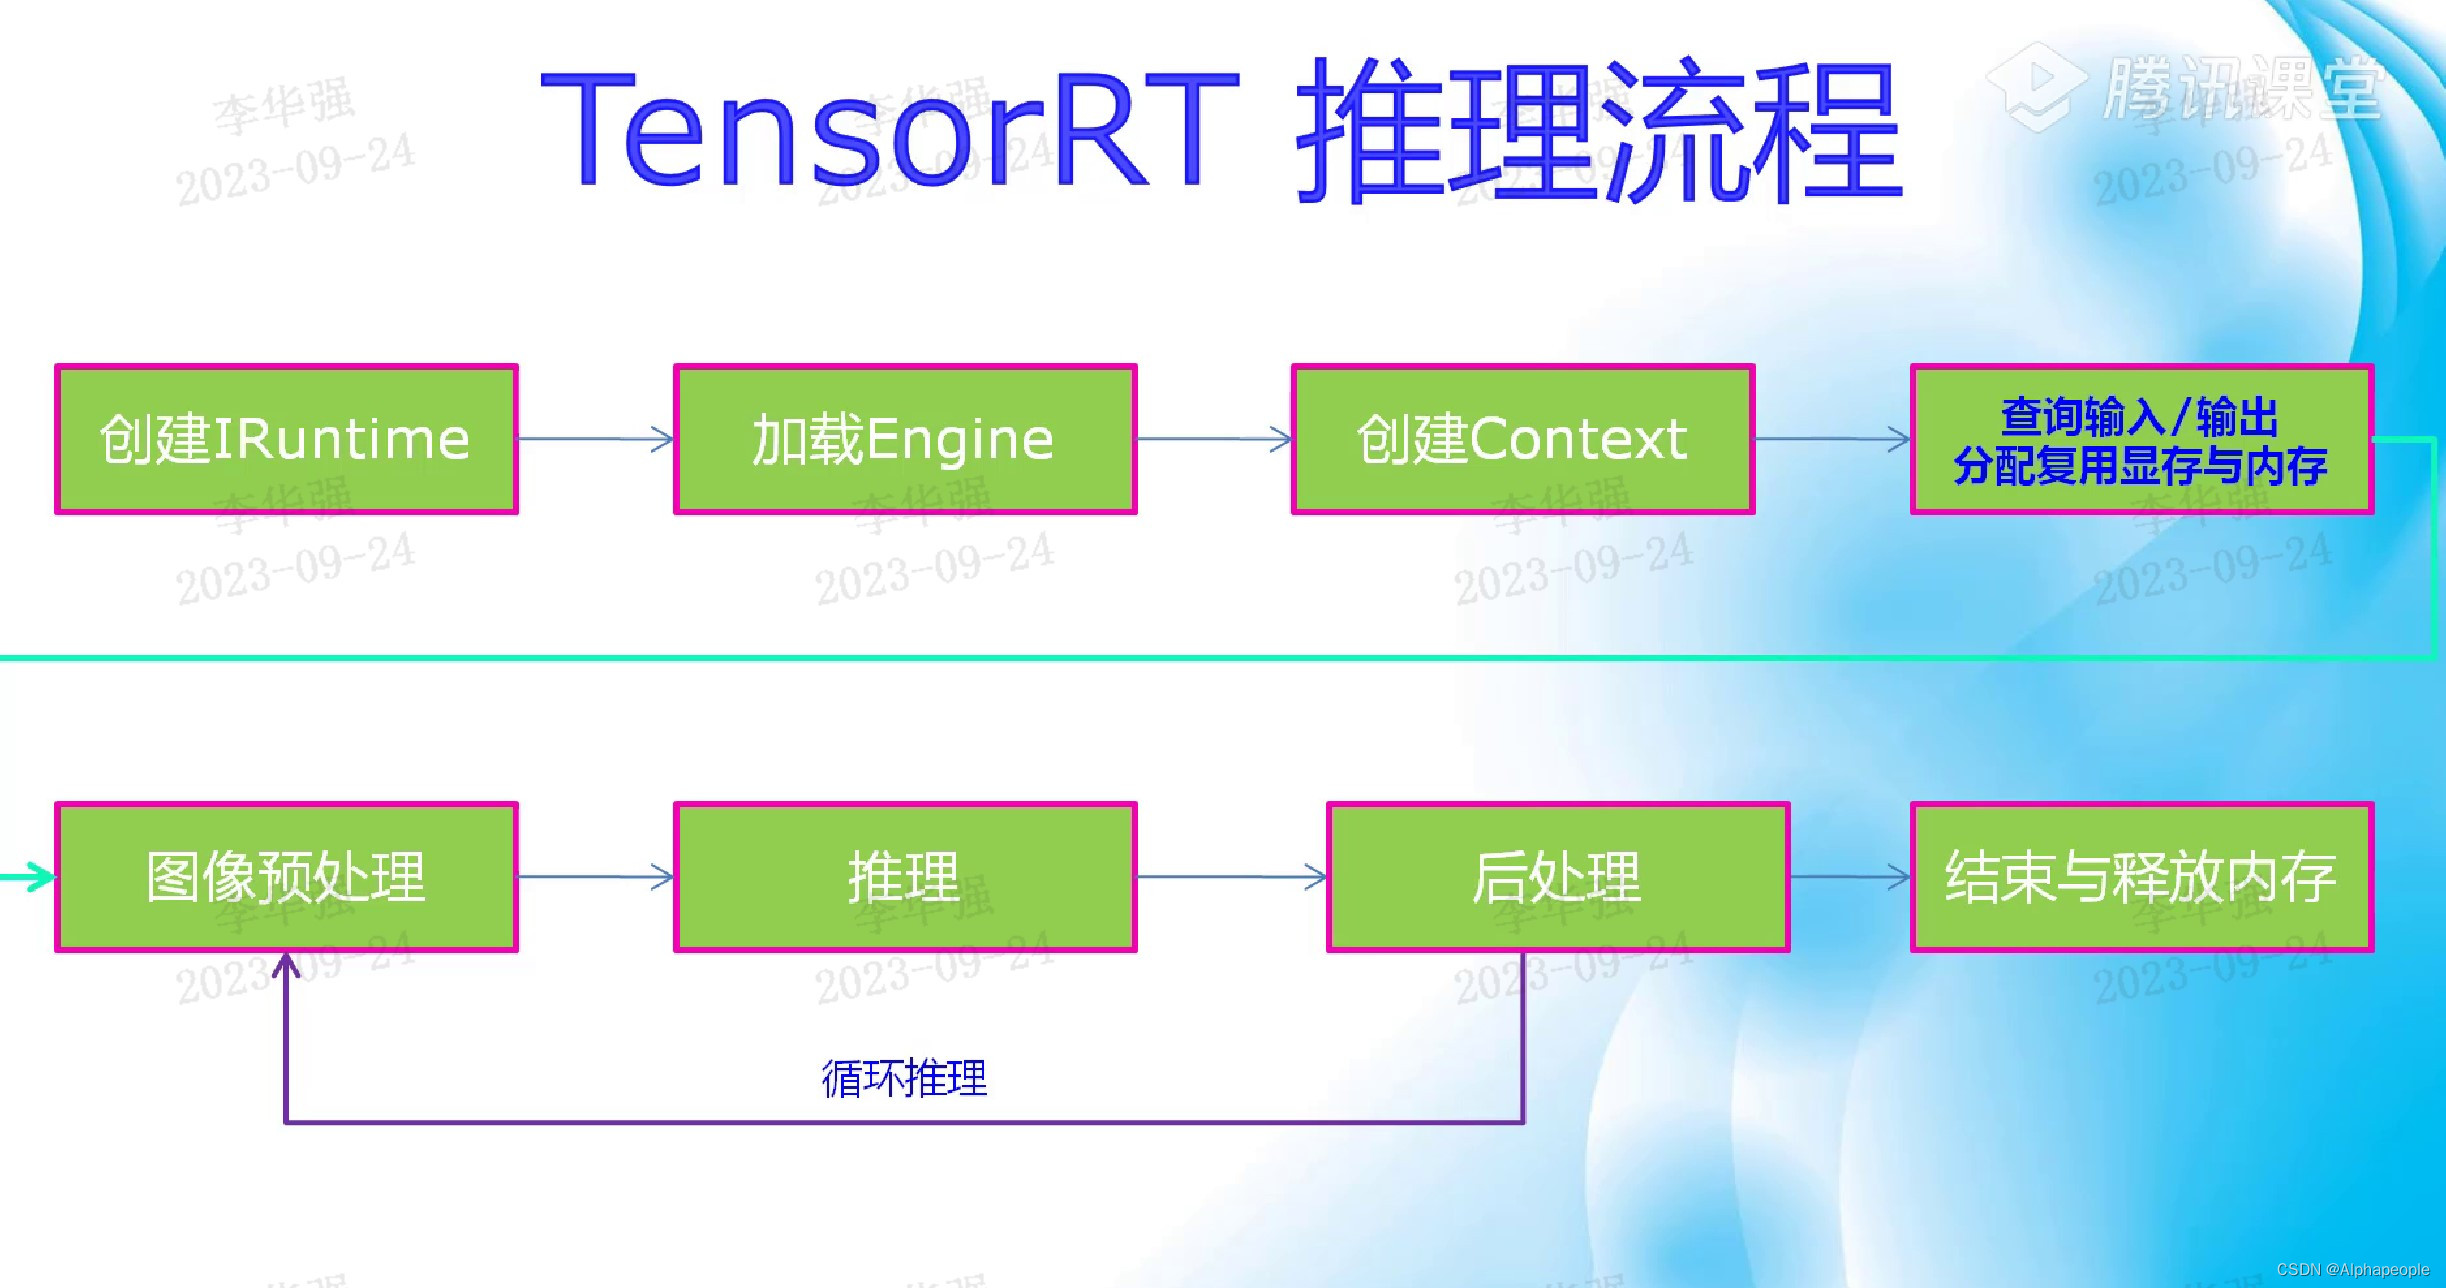 tensorrt C++推理